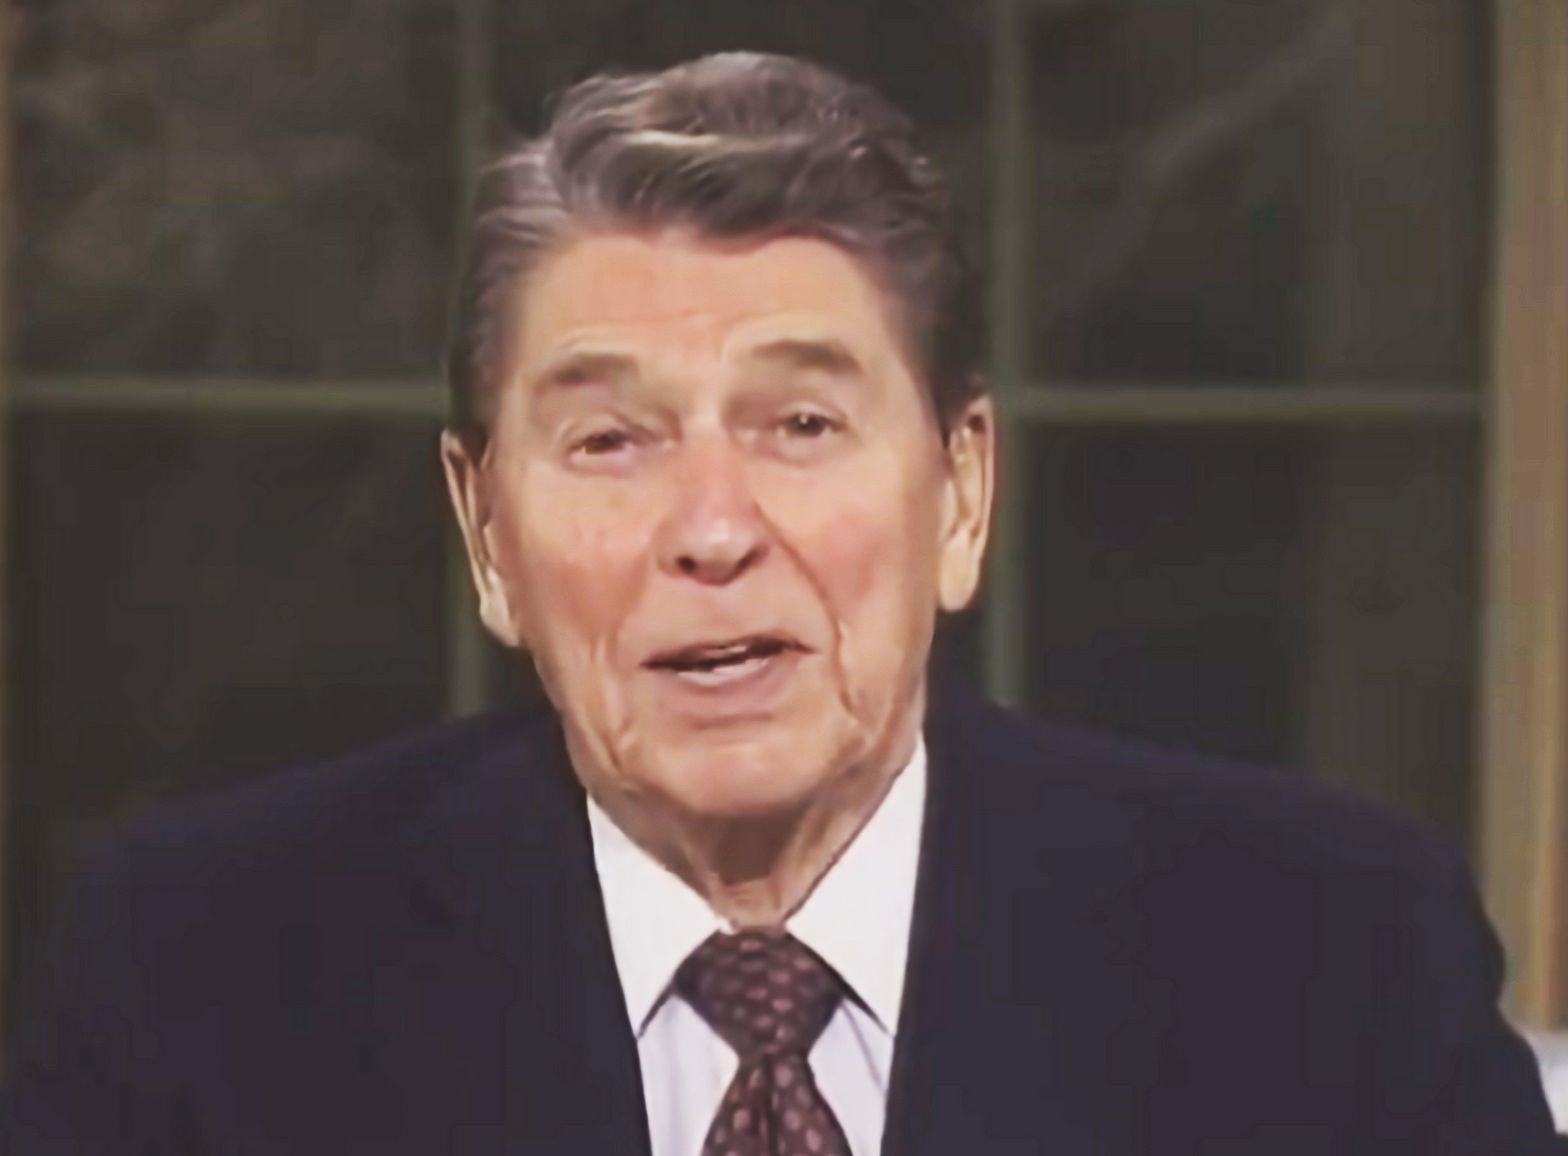 Reagan's Farewell Address